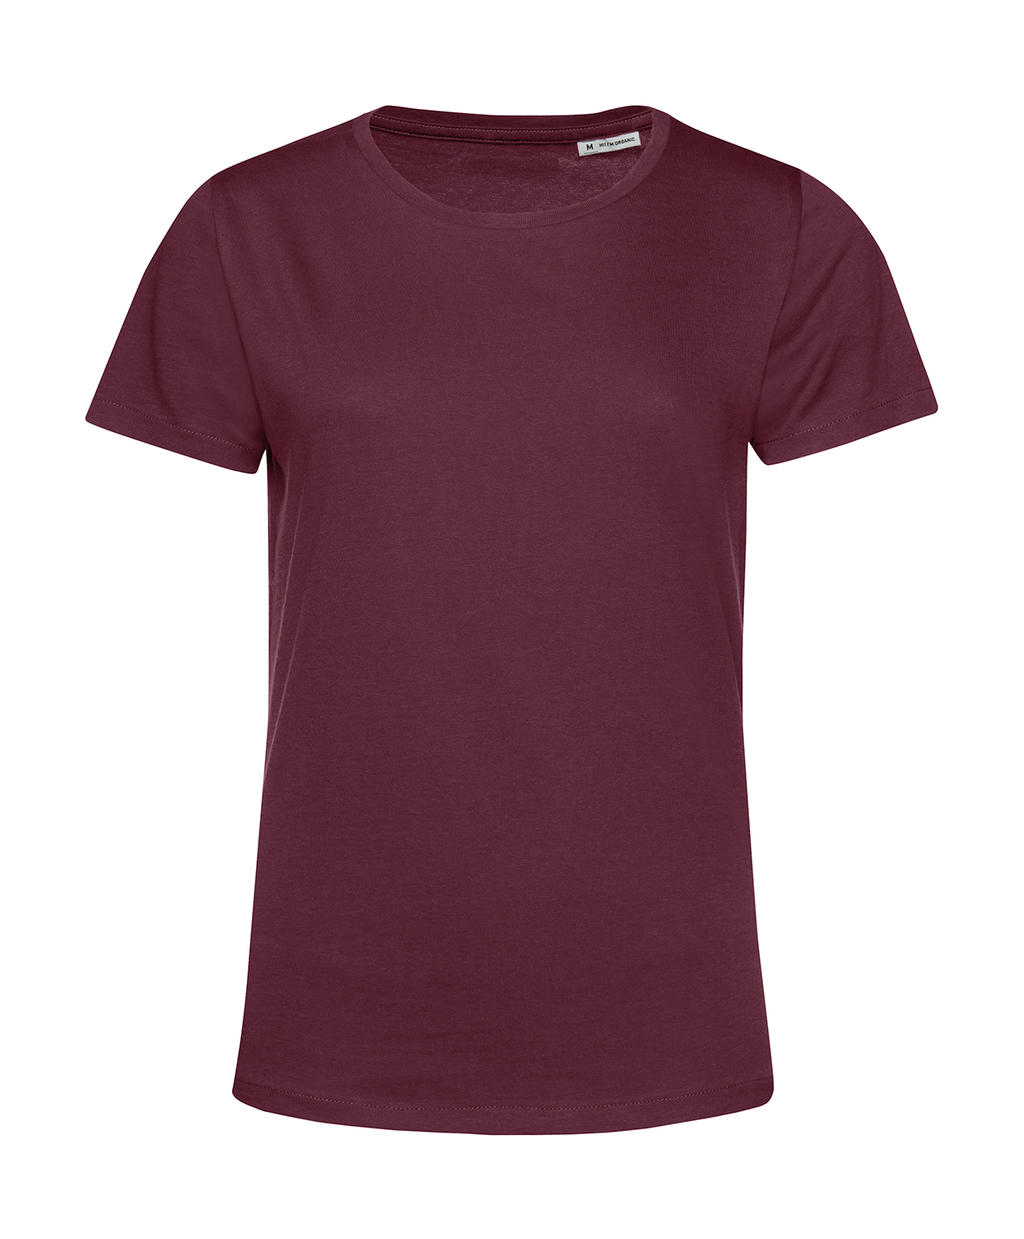 Dámske tričko #organic inspire E150 /women - burgundy